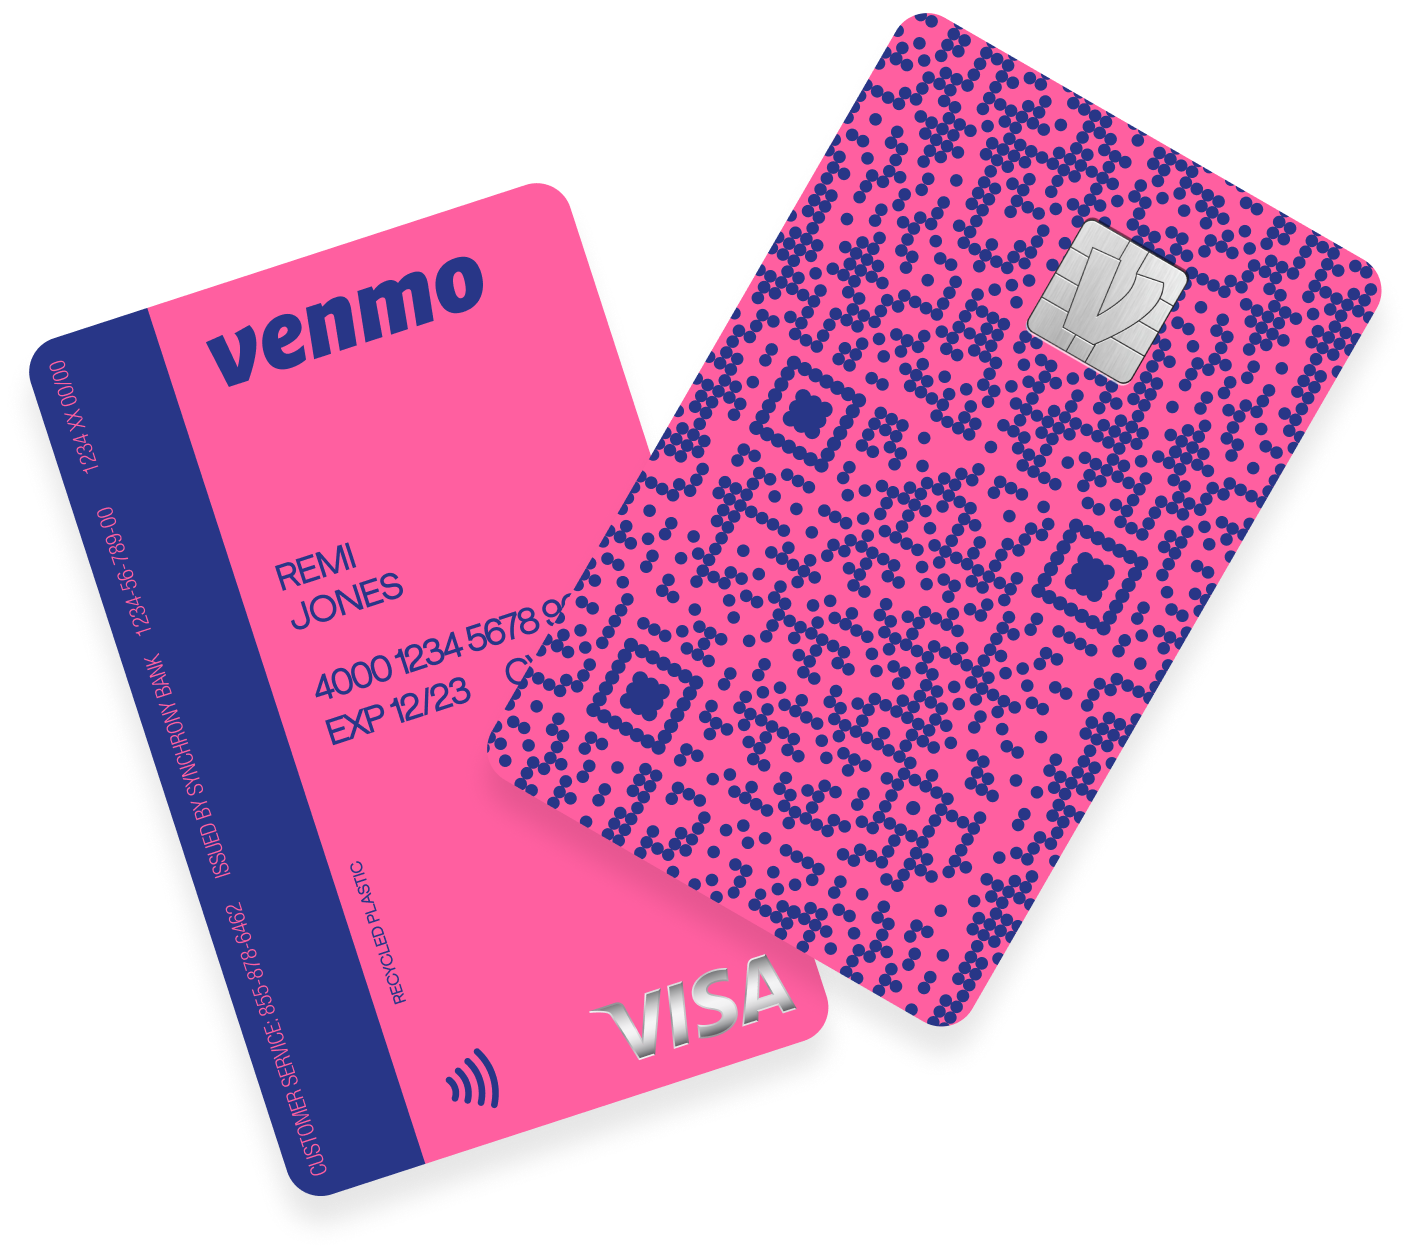 The Venmo Credit Card